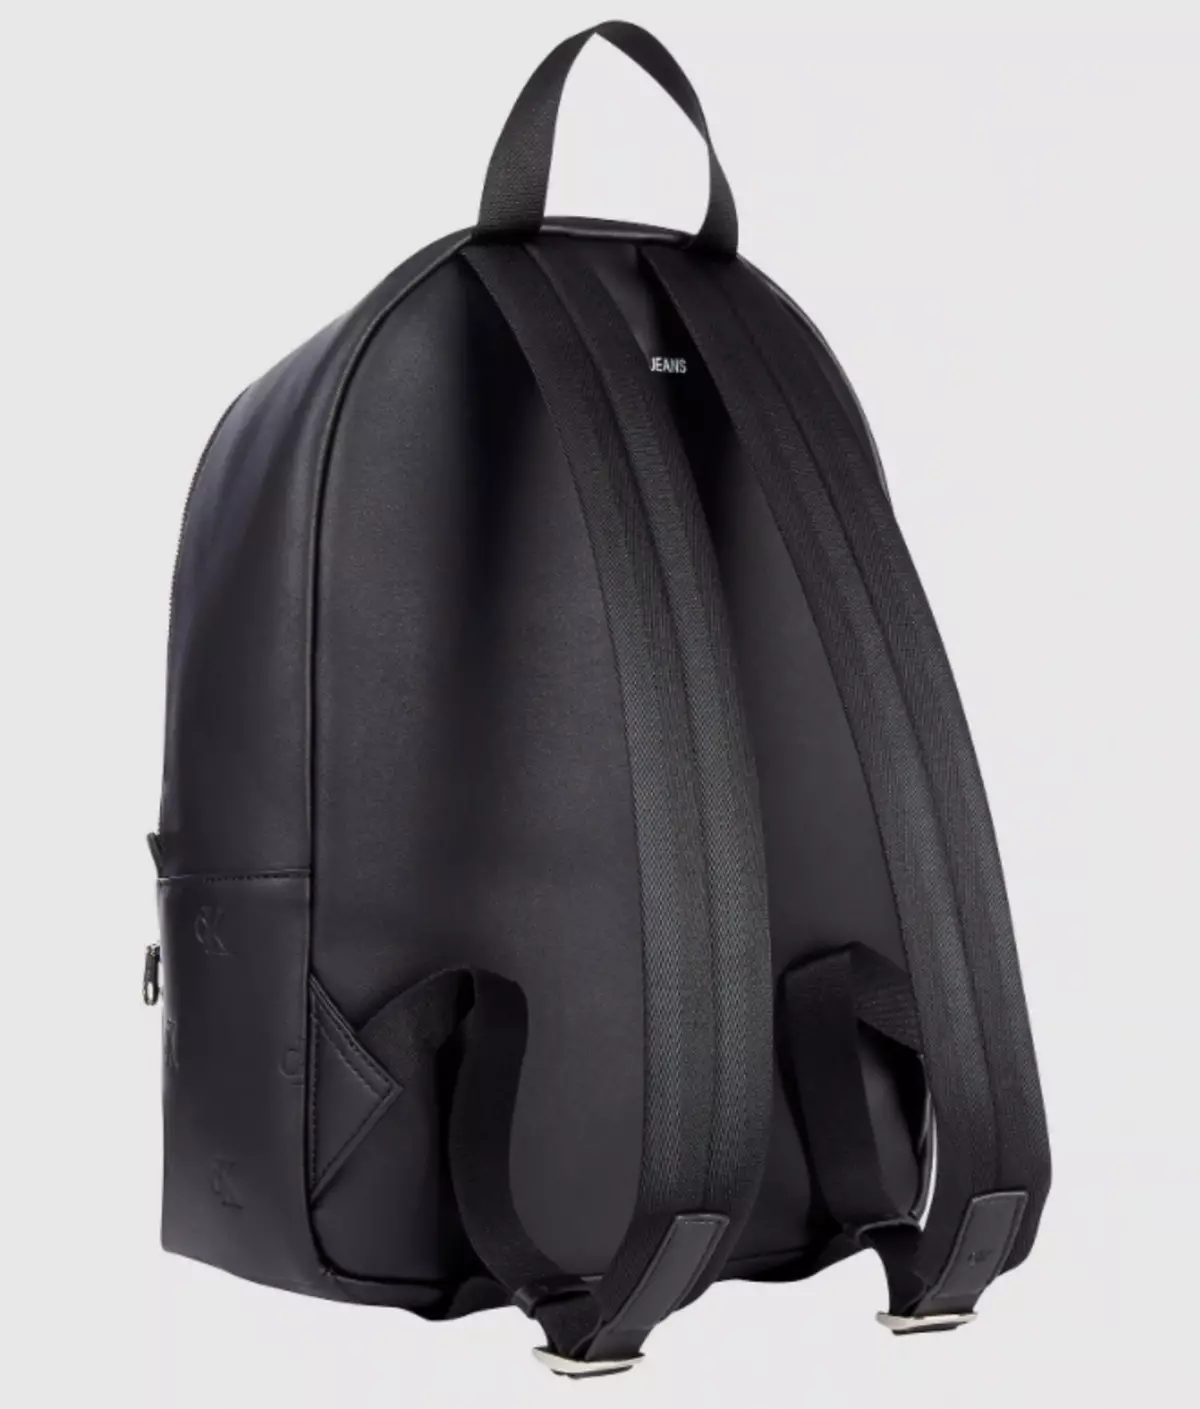 Calvin Klein Backpacks: Black Kike na Mwanaume, Leather Red, White, Yellow Kwa Monogramm na Rangi nyingine Mifuko - Backpacks 15401_29